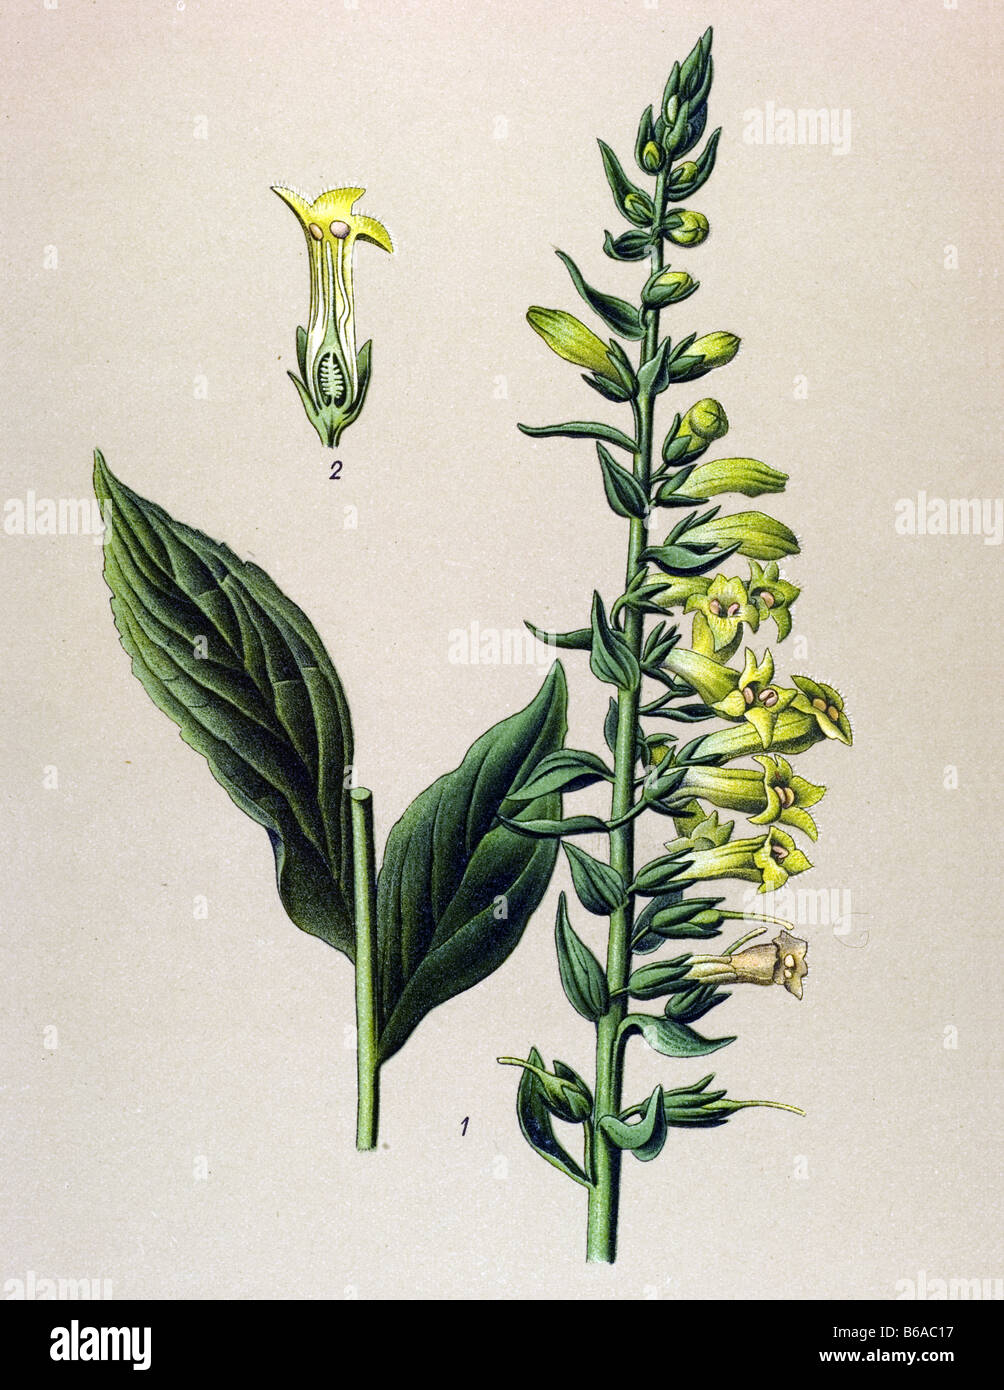 Yellow Foxglove, Digitalis lutea poisonous plants illustrations Stock Photo